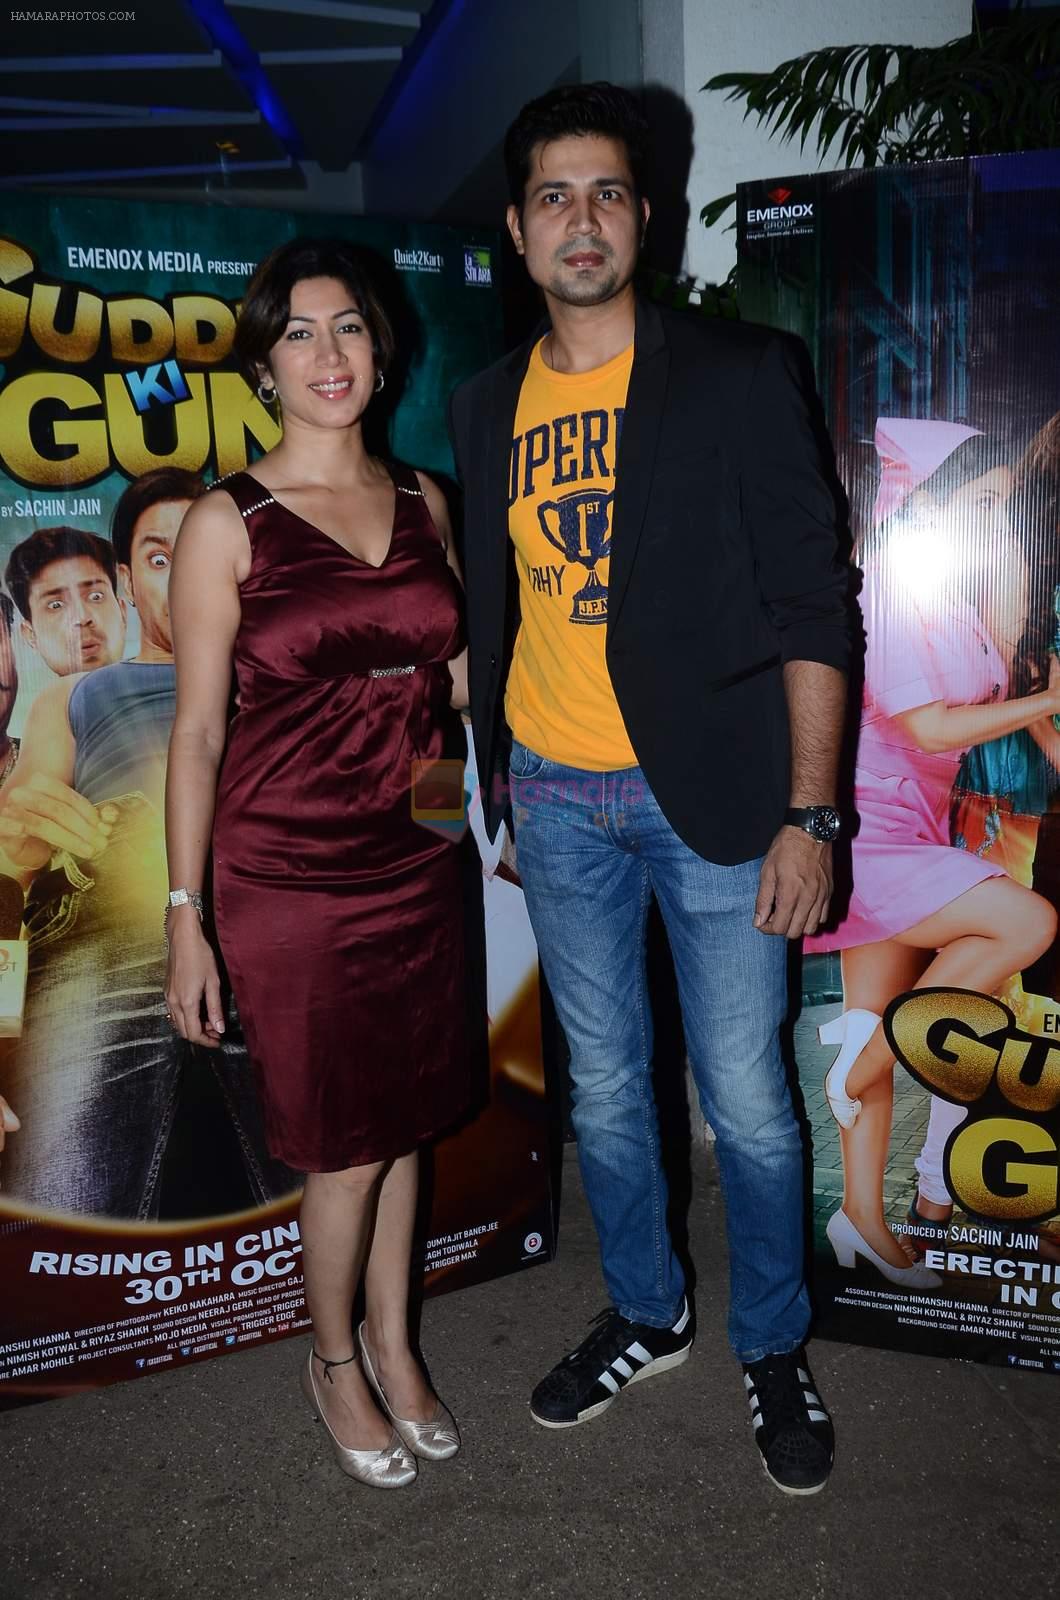 at Guddu Ki Gun screening in Sunny Super Sound on 26th Oct 2015